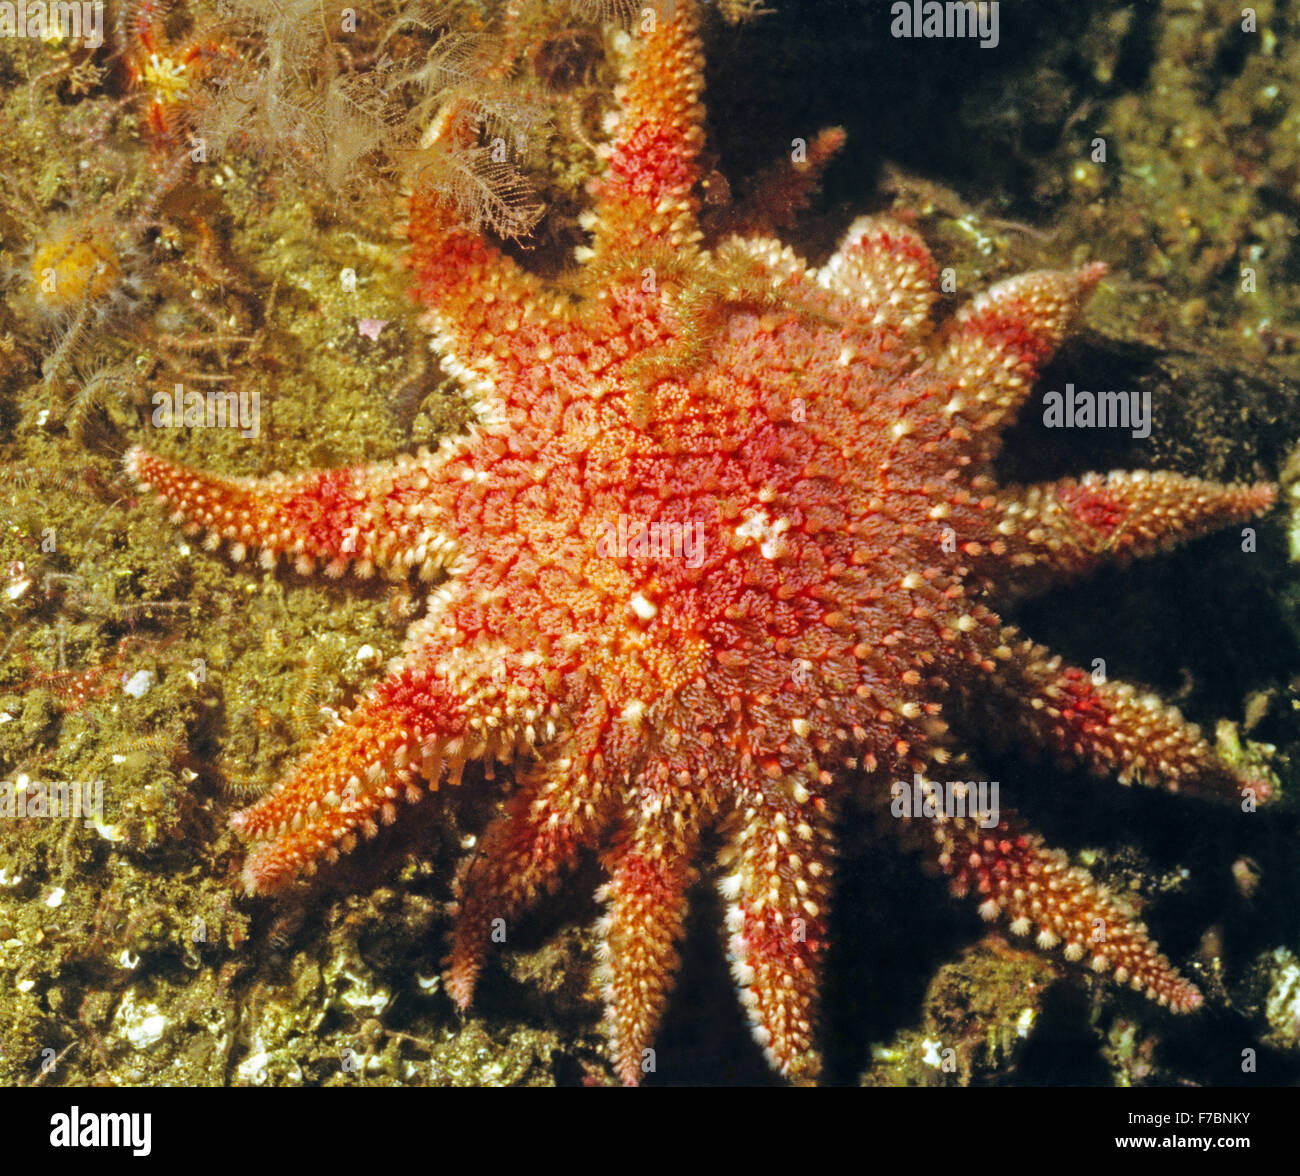 Sunstar, starfish, with a brittle star passenger. Amazing underwater marine life off the coast at St Abbs Scotland. Stock Photo